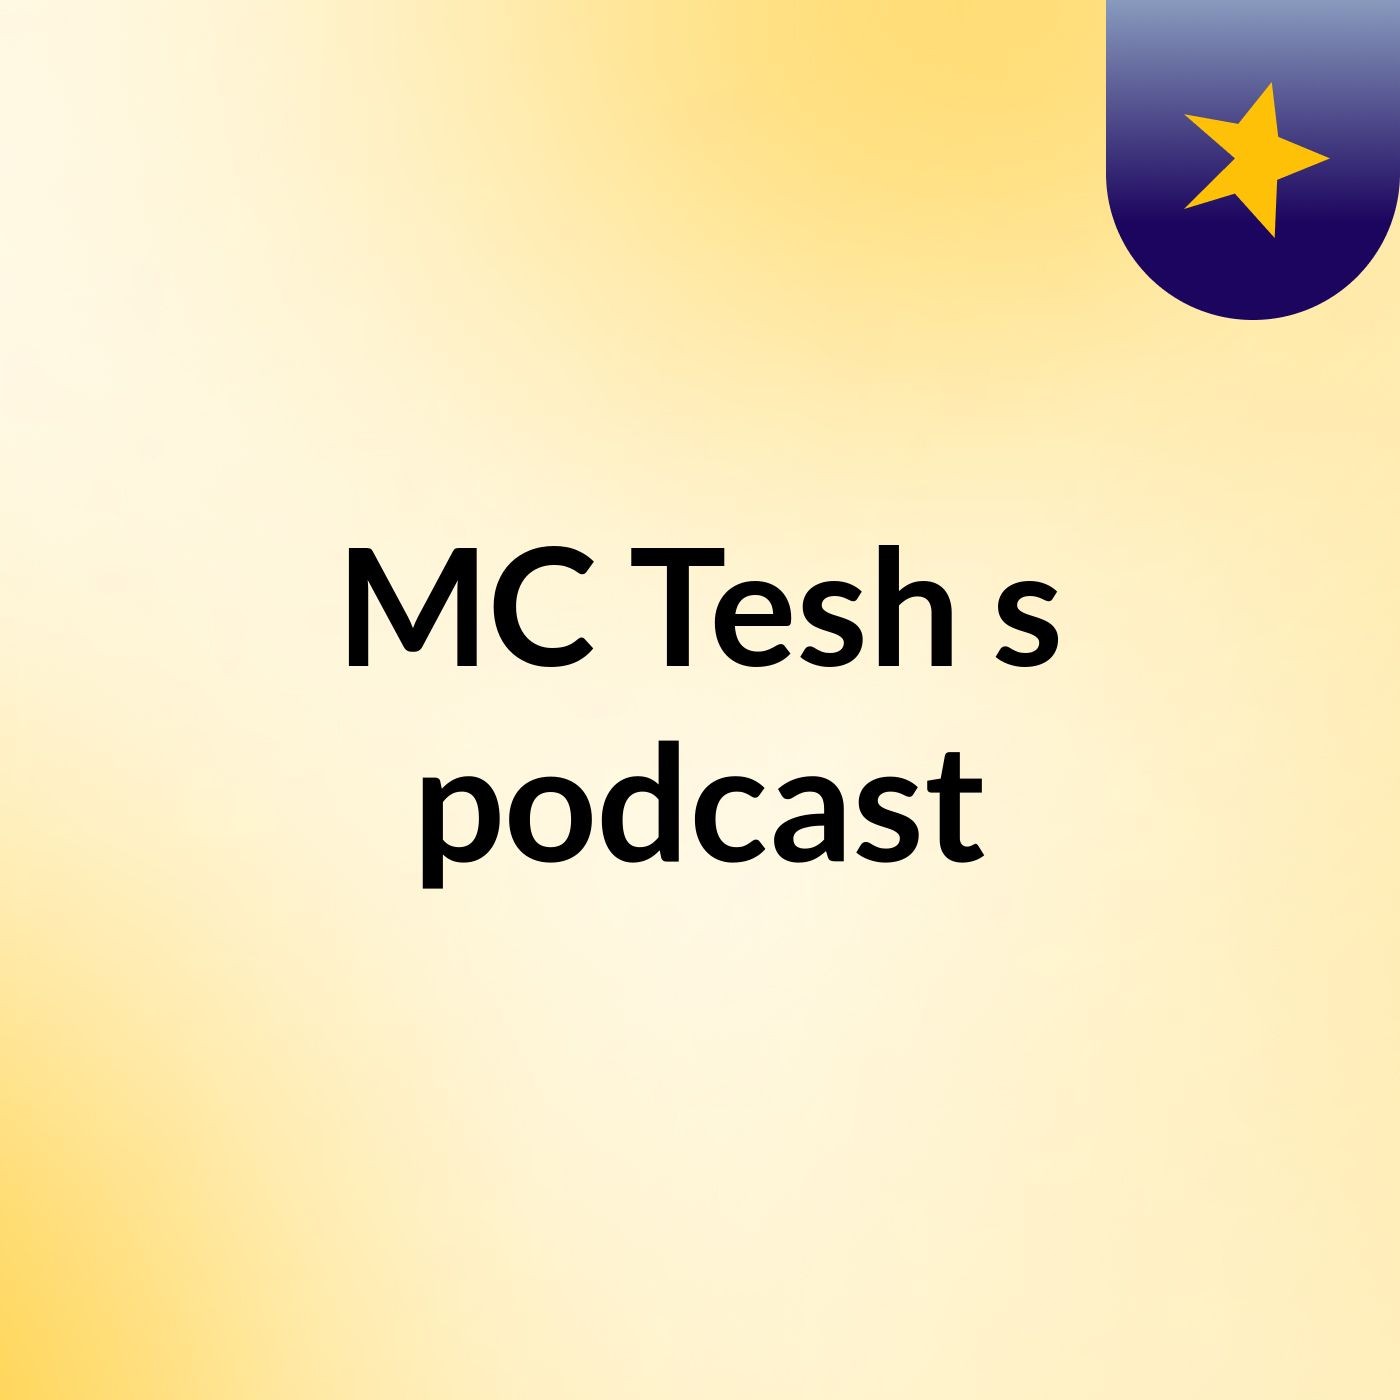 MC Tesh's podcast